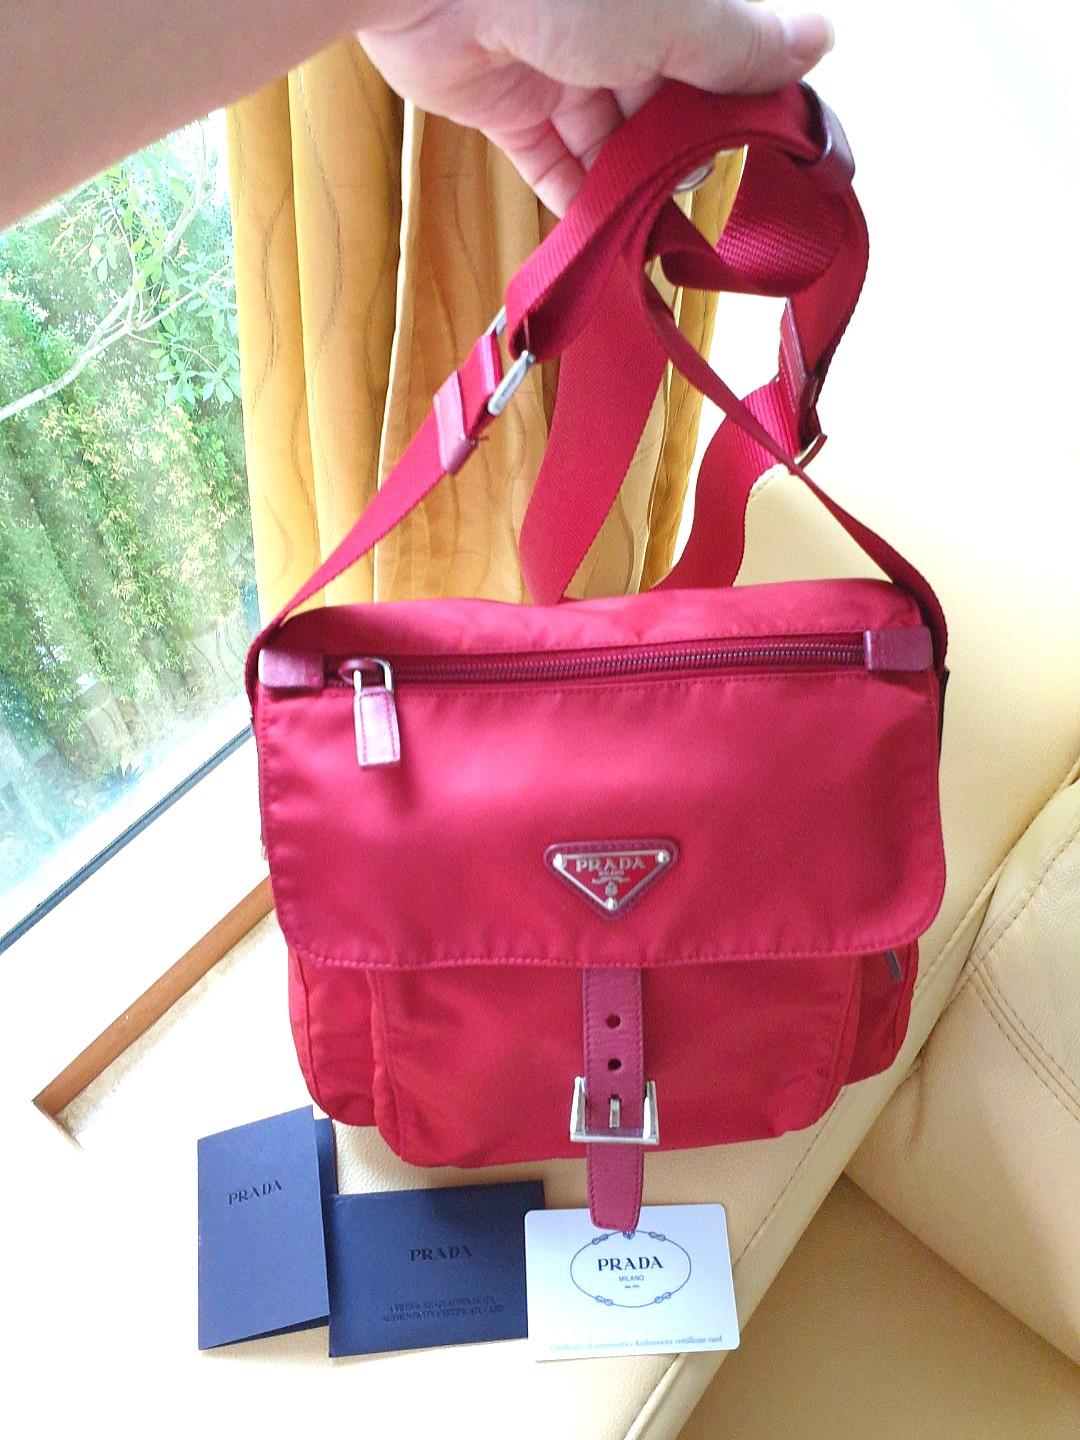 prada red sling bag